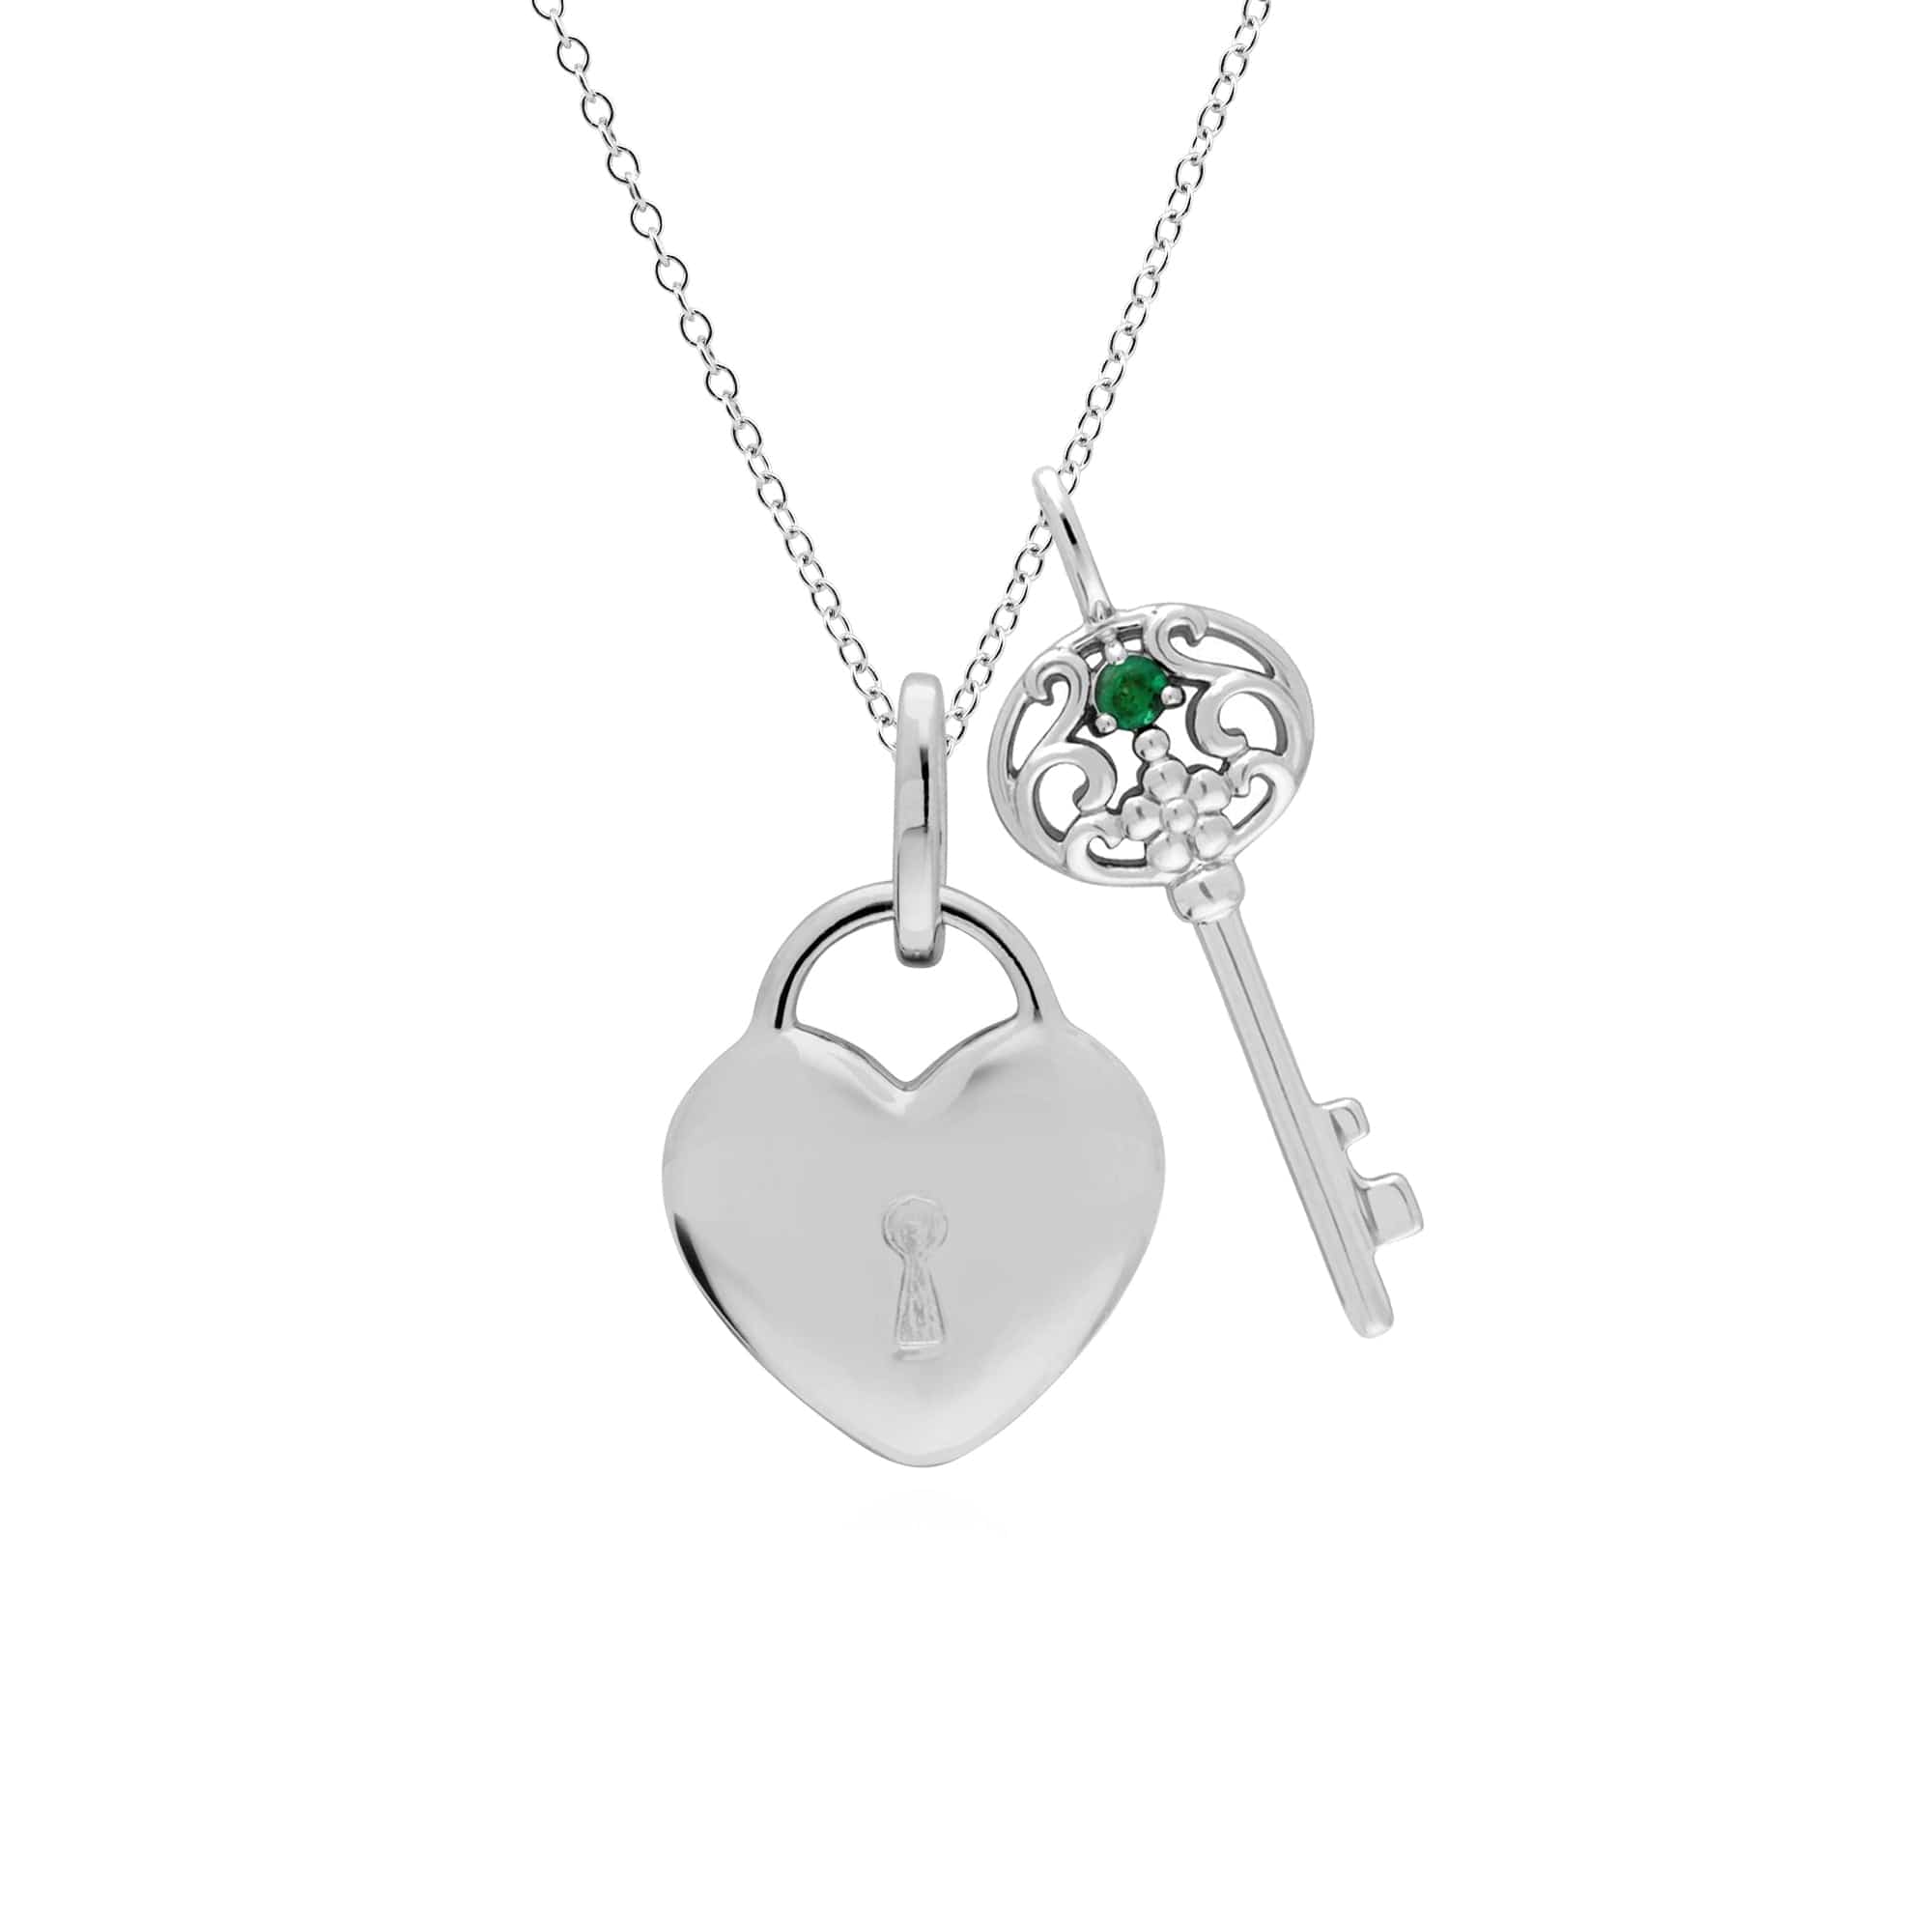 270P026807925-270P027001925 Classic Heart Lock Pendant & Emerald Big Key Charm in 925 Sterling Silver 1